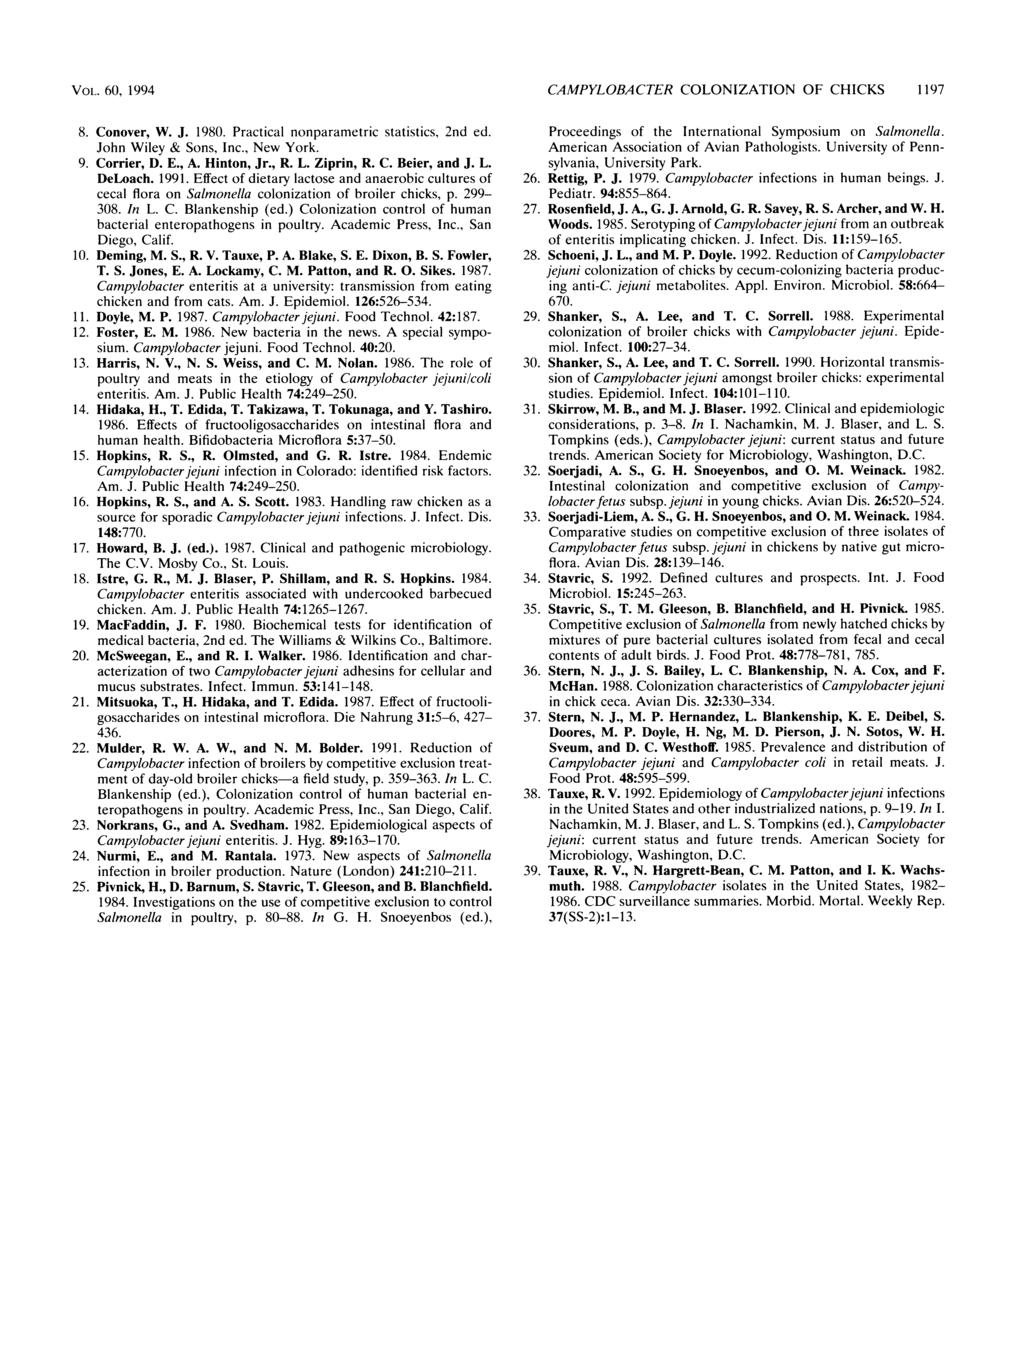 VOL. 60, 1994 8. Conover, W. J. 1980. Practical nonparametric statistics, 2nd ed. John Wiley & Sons, Inc., New York. 9. Corrier, D. E., A. Hinton, Jr., R. L. Ziprin, R. C. Beier, and J. L. DeLoach.